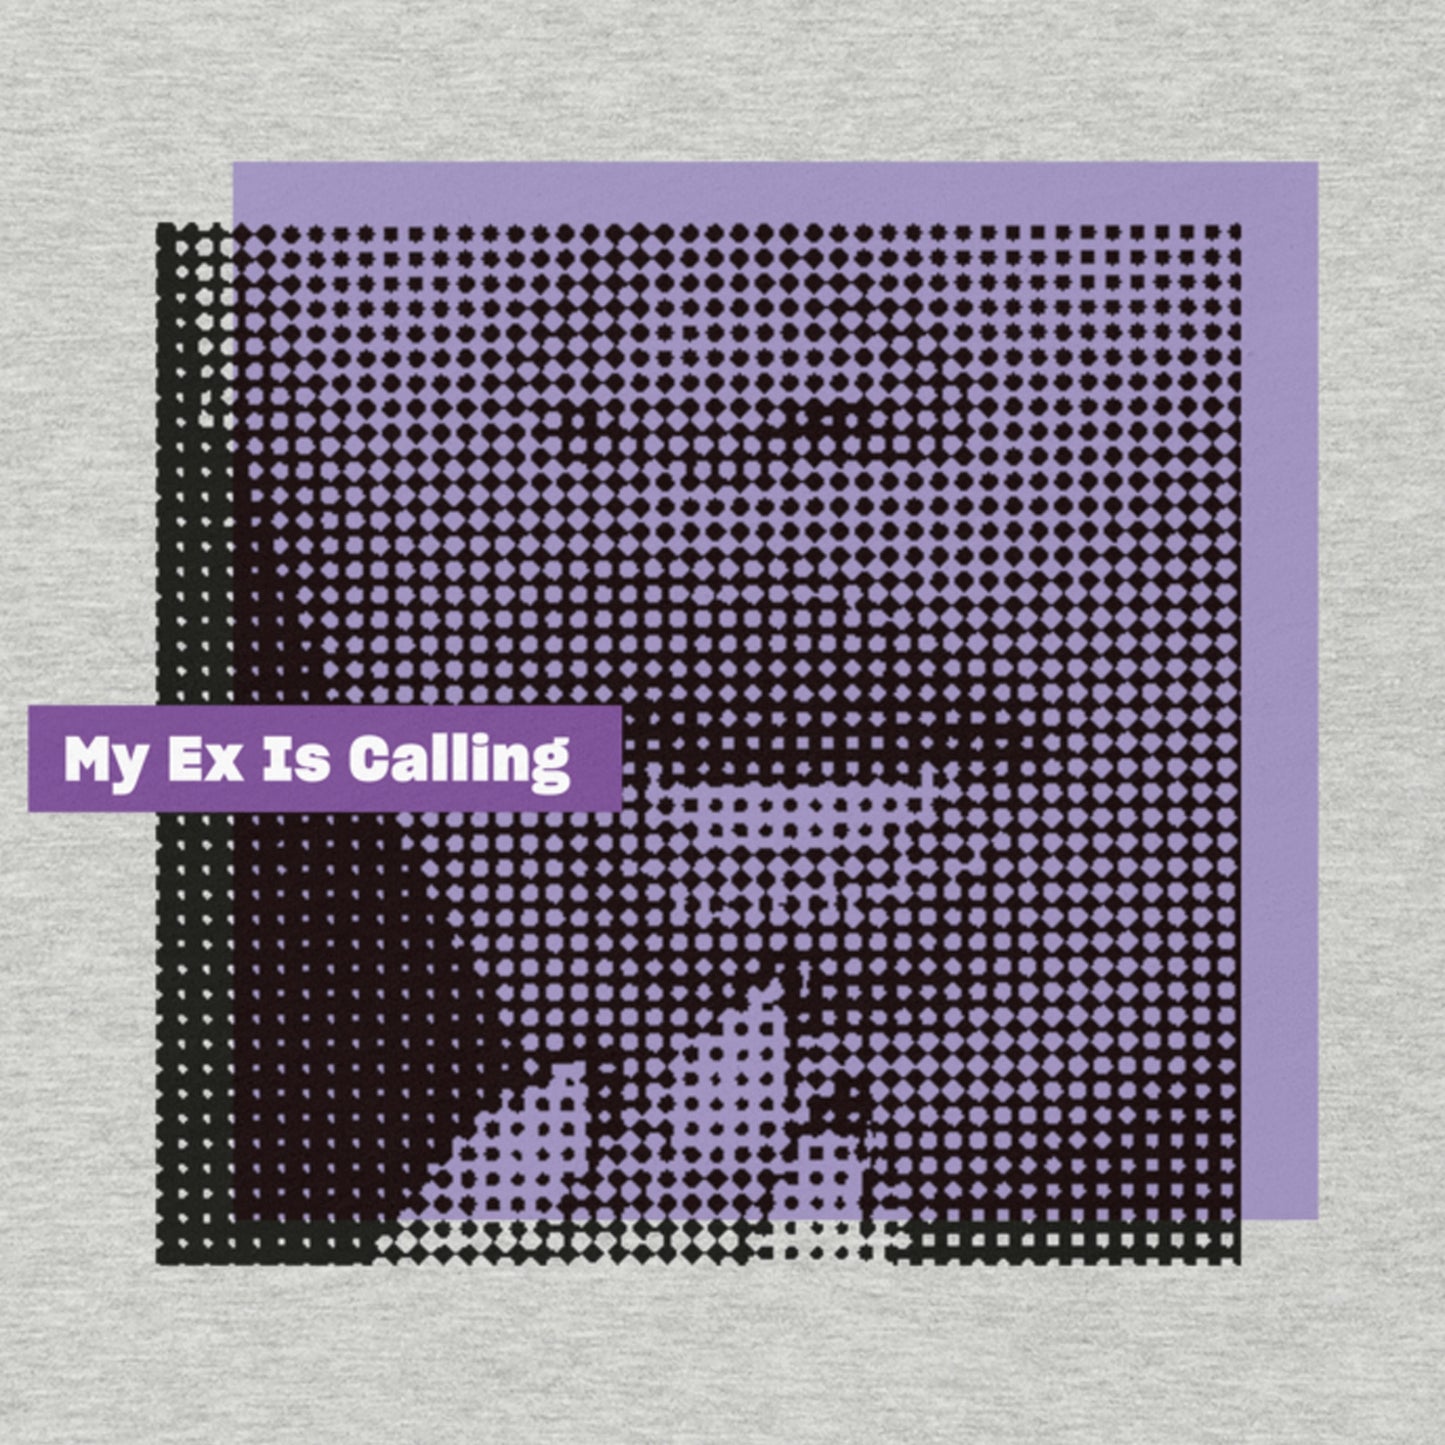 Keke Palmer "My Ex Is Calling" T-Shirt